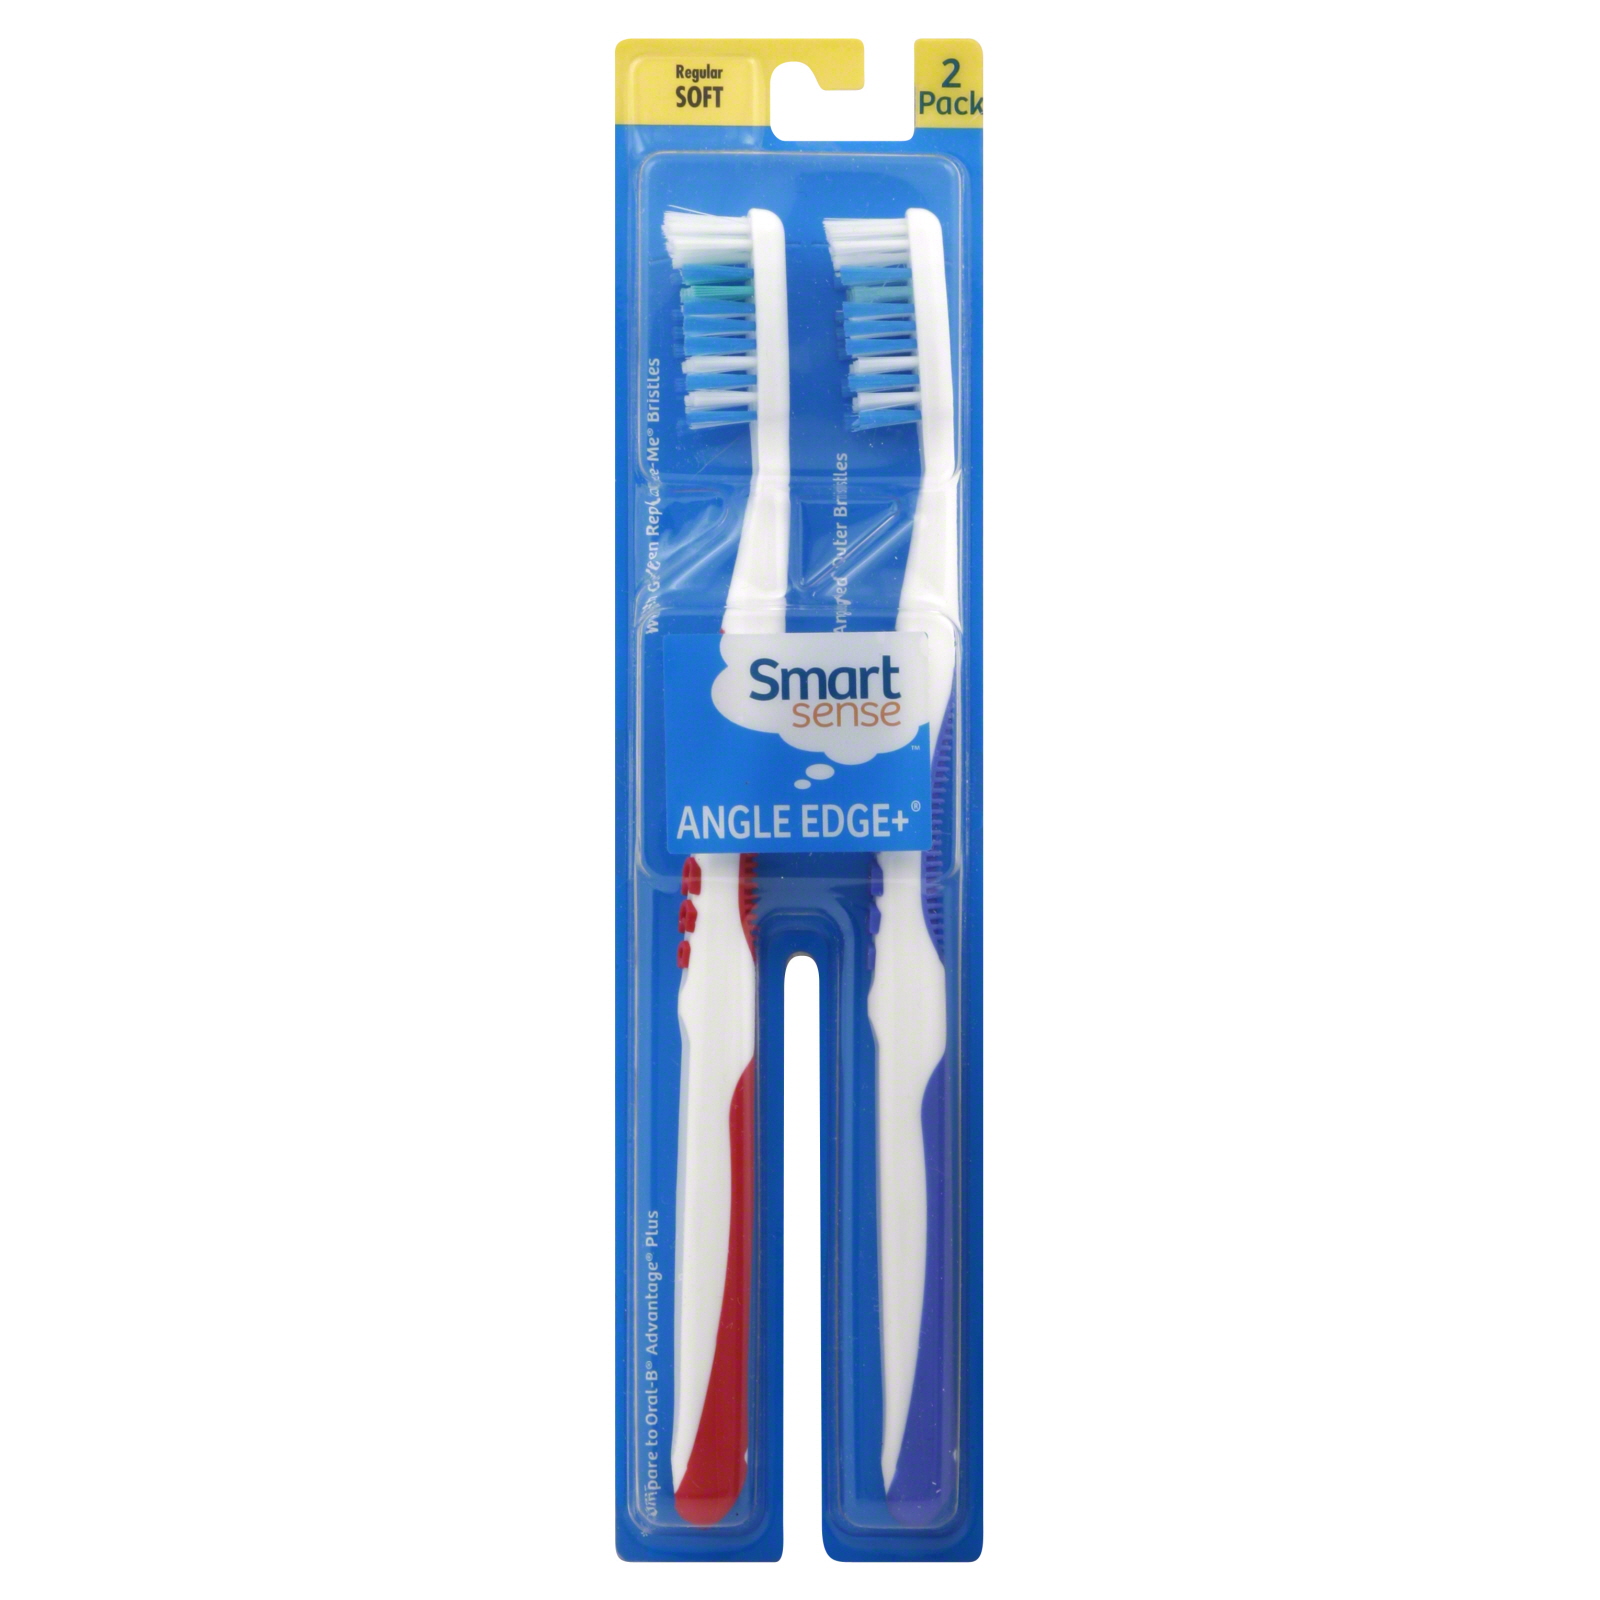 Smart Sense Angle Edge+ Toothbrushes, Regular, Soft, 2 toothbrushes